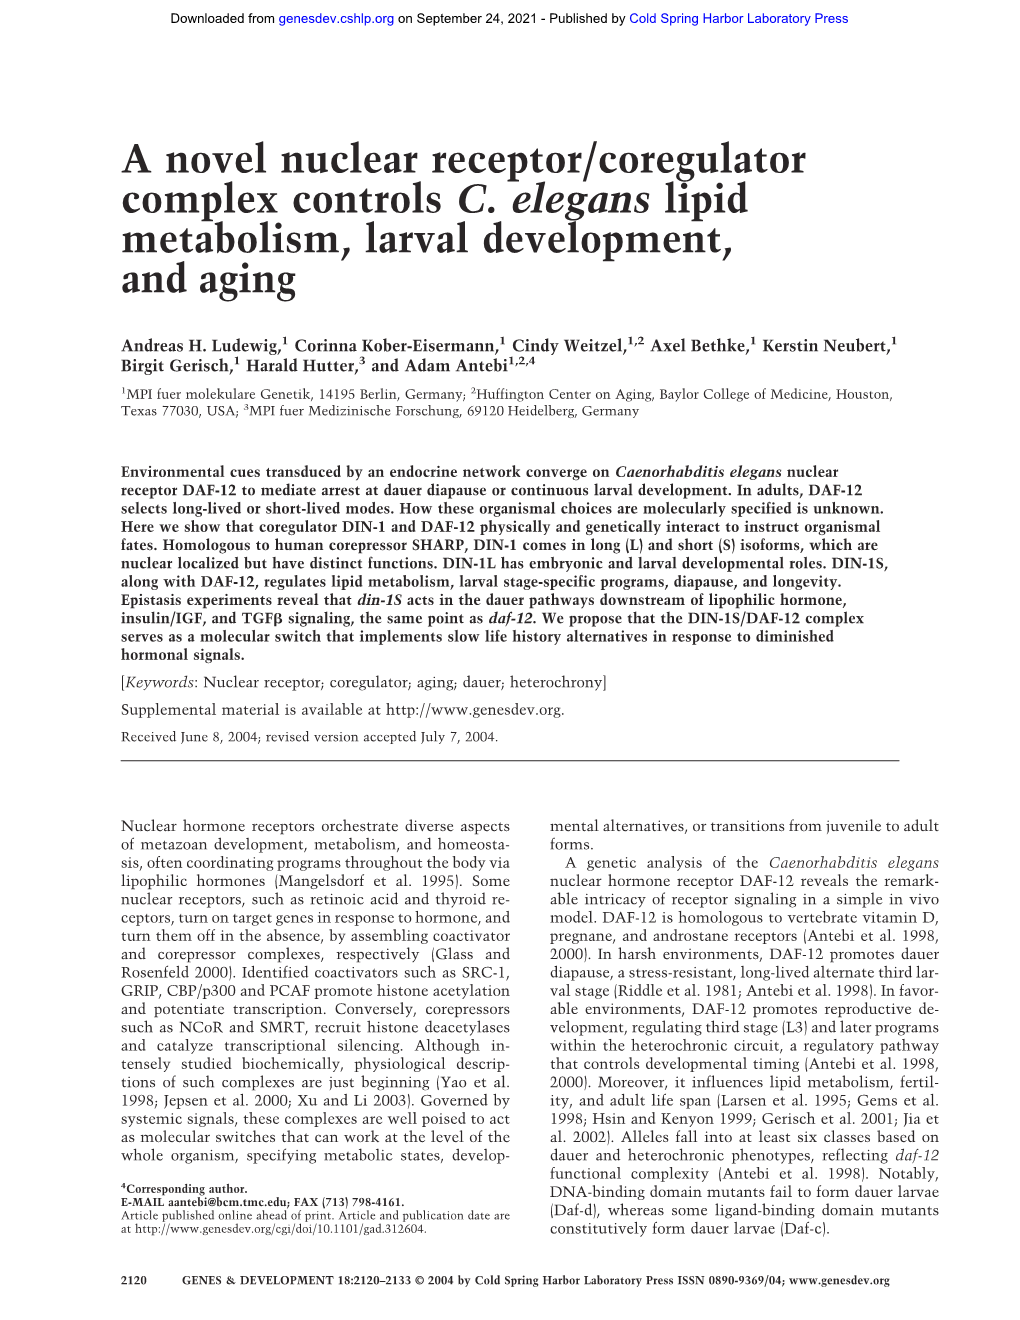 A Novel Nuclear Receptor/Coregulator Complex Controls C. Elegans Lipid Metabolism, Larval Development, and Aging